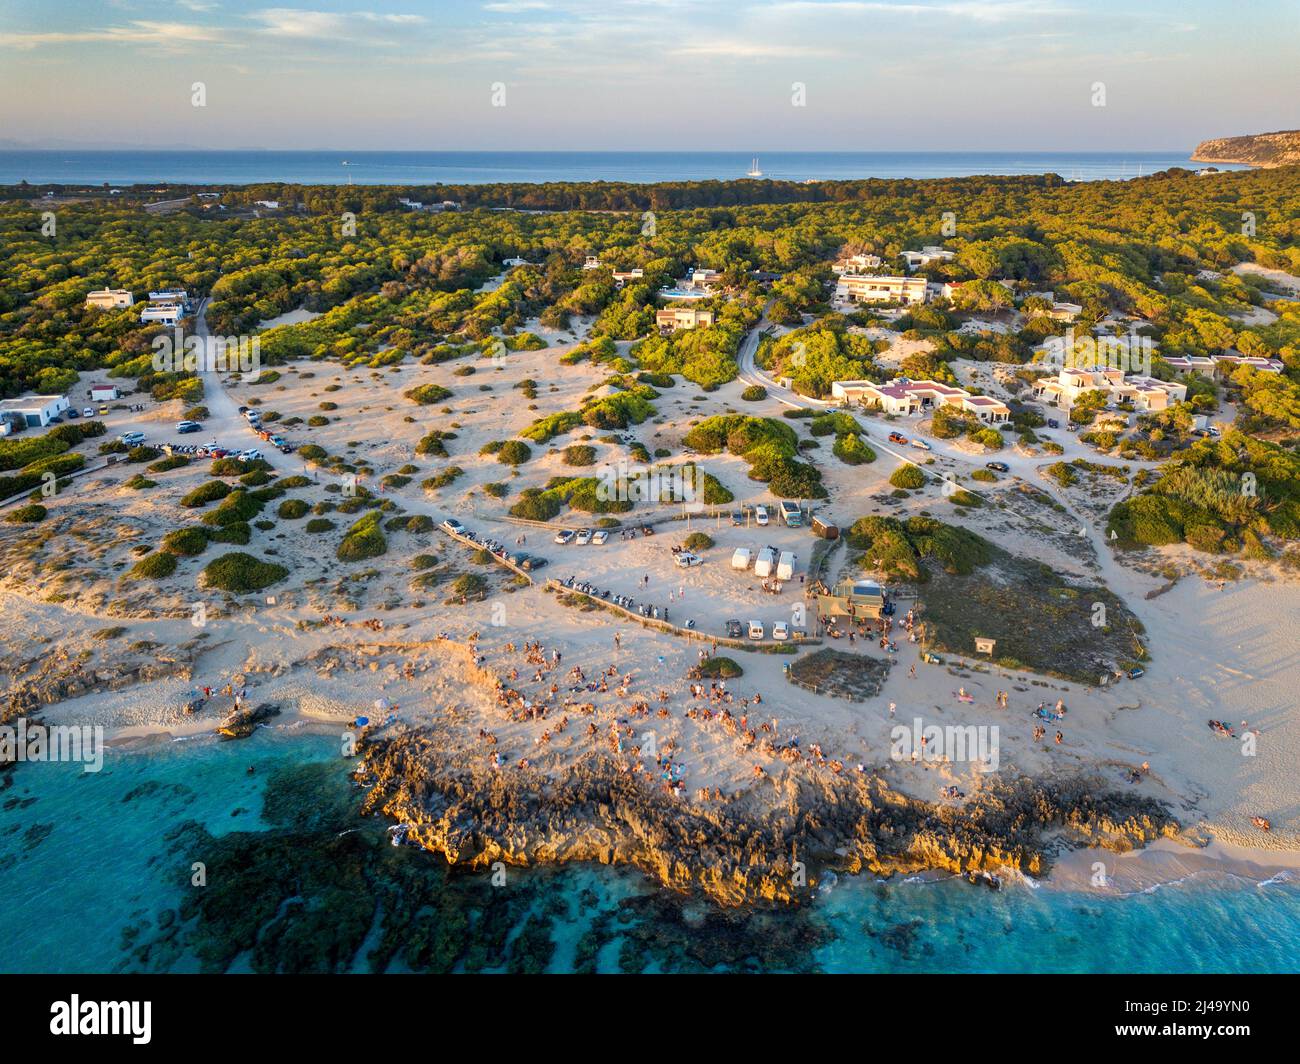 Vista aérea al atardecer en una famosa playa de Plata de Mijorn, Piratabus chiringuito bar Formentera (Islas Baleares). Foto de stock